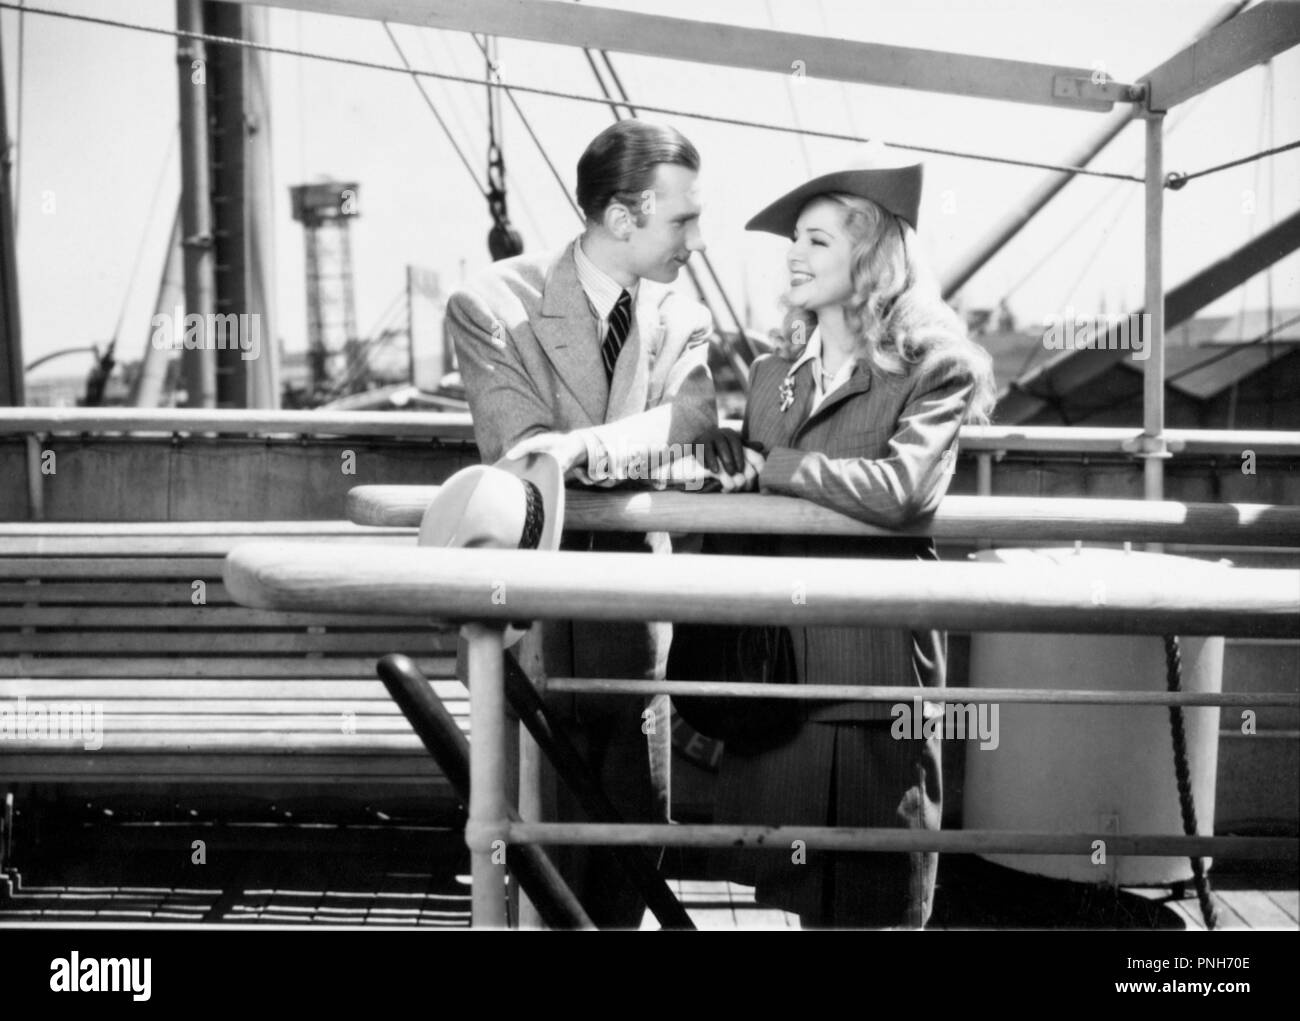 Original film title: SE LE FUE EL NOVIO. English title: SE LE FUE EL NOVIO. Year: 1945. Director: JULIO SALVADOR. Stars: SARA MONTIEL. Stock Photo